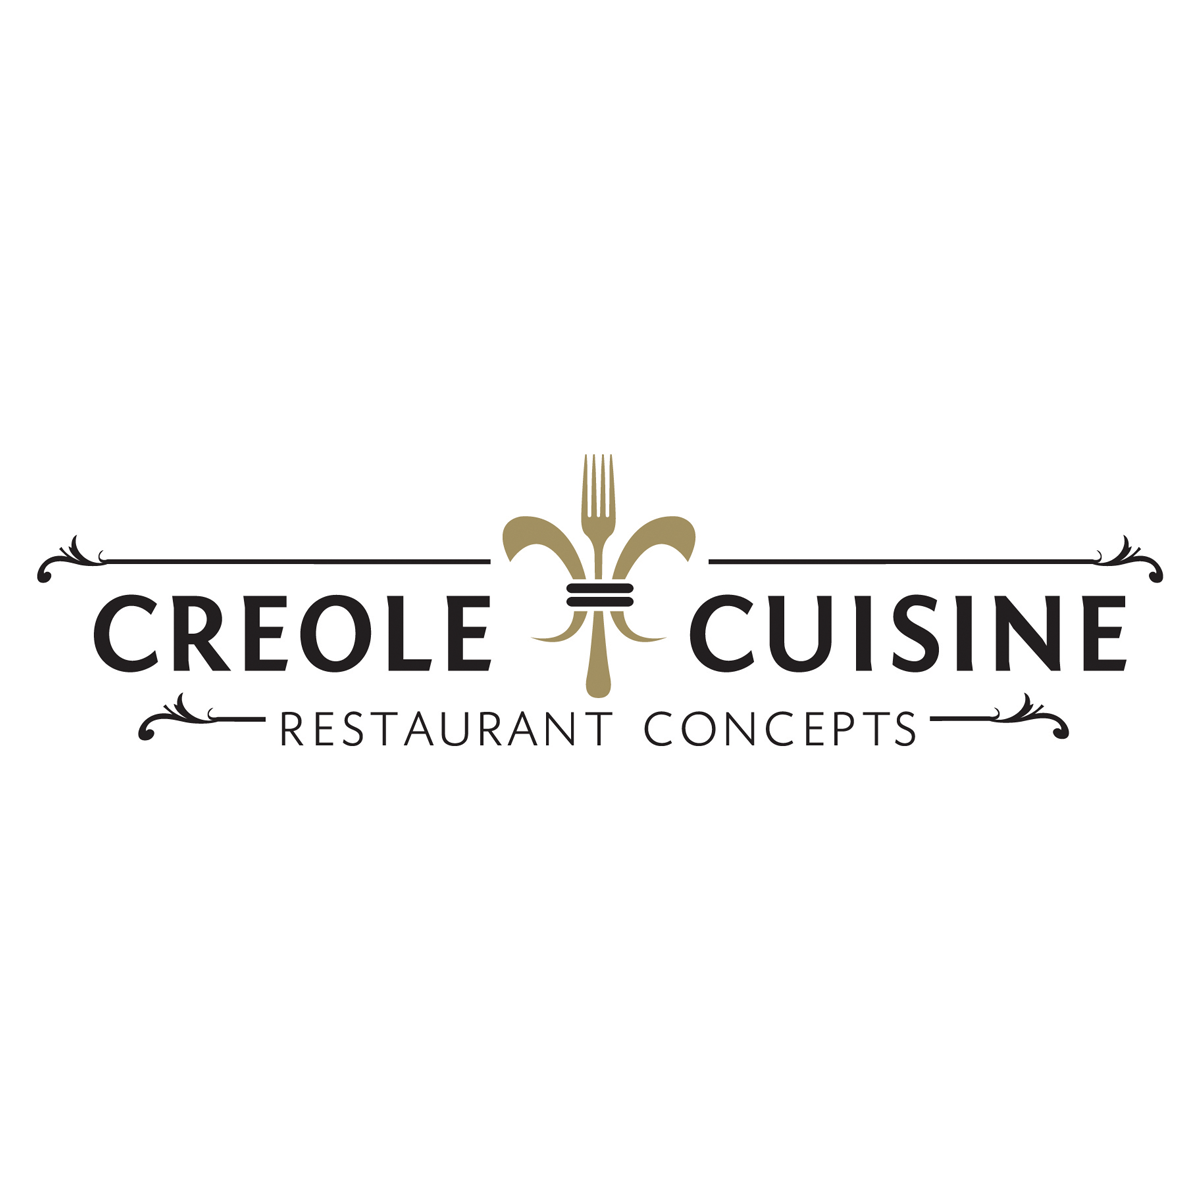 Creole Cuisine Restaurant Concepts